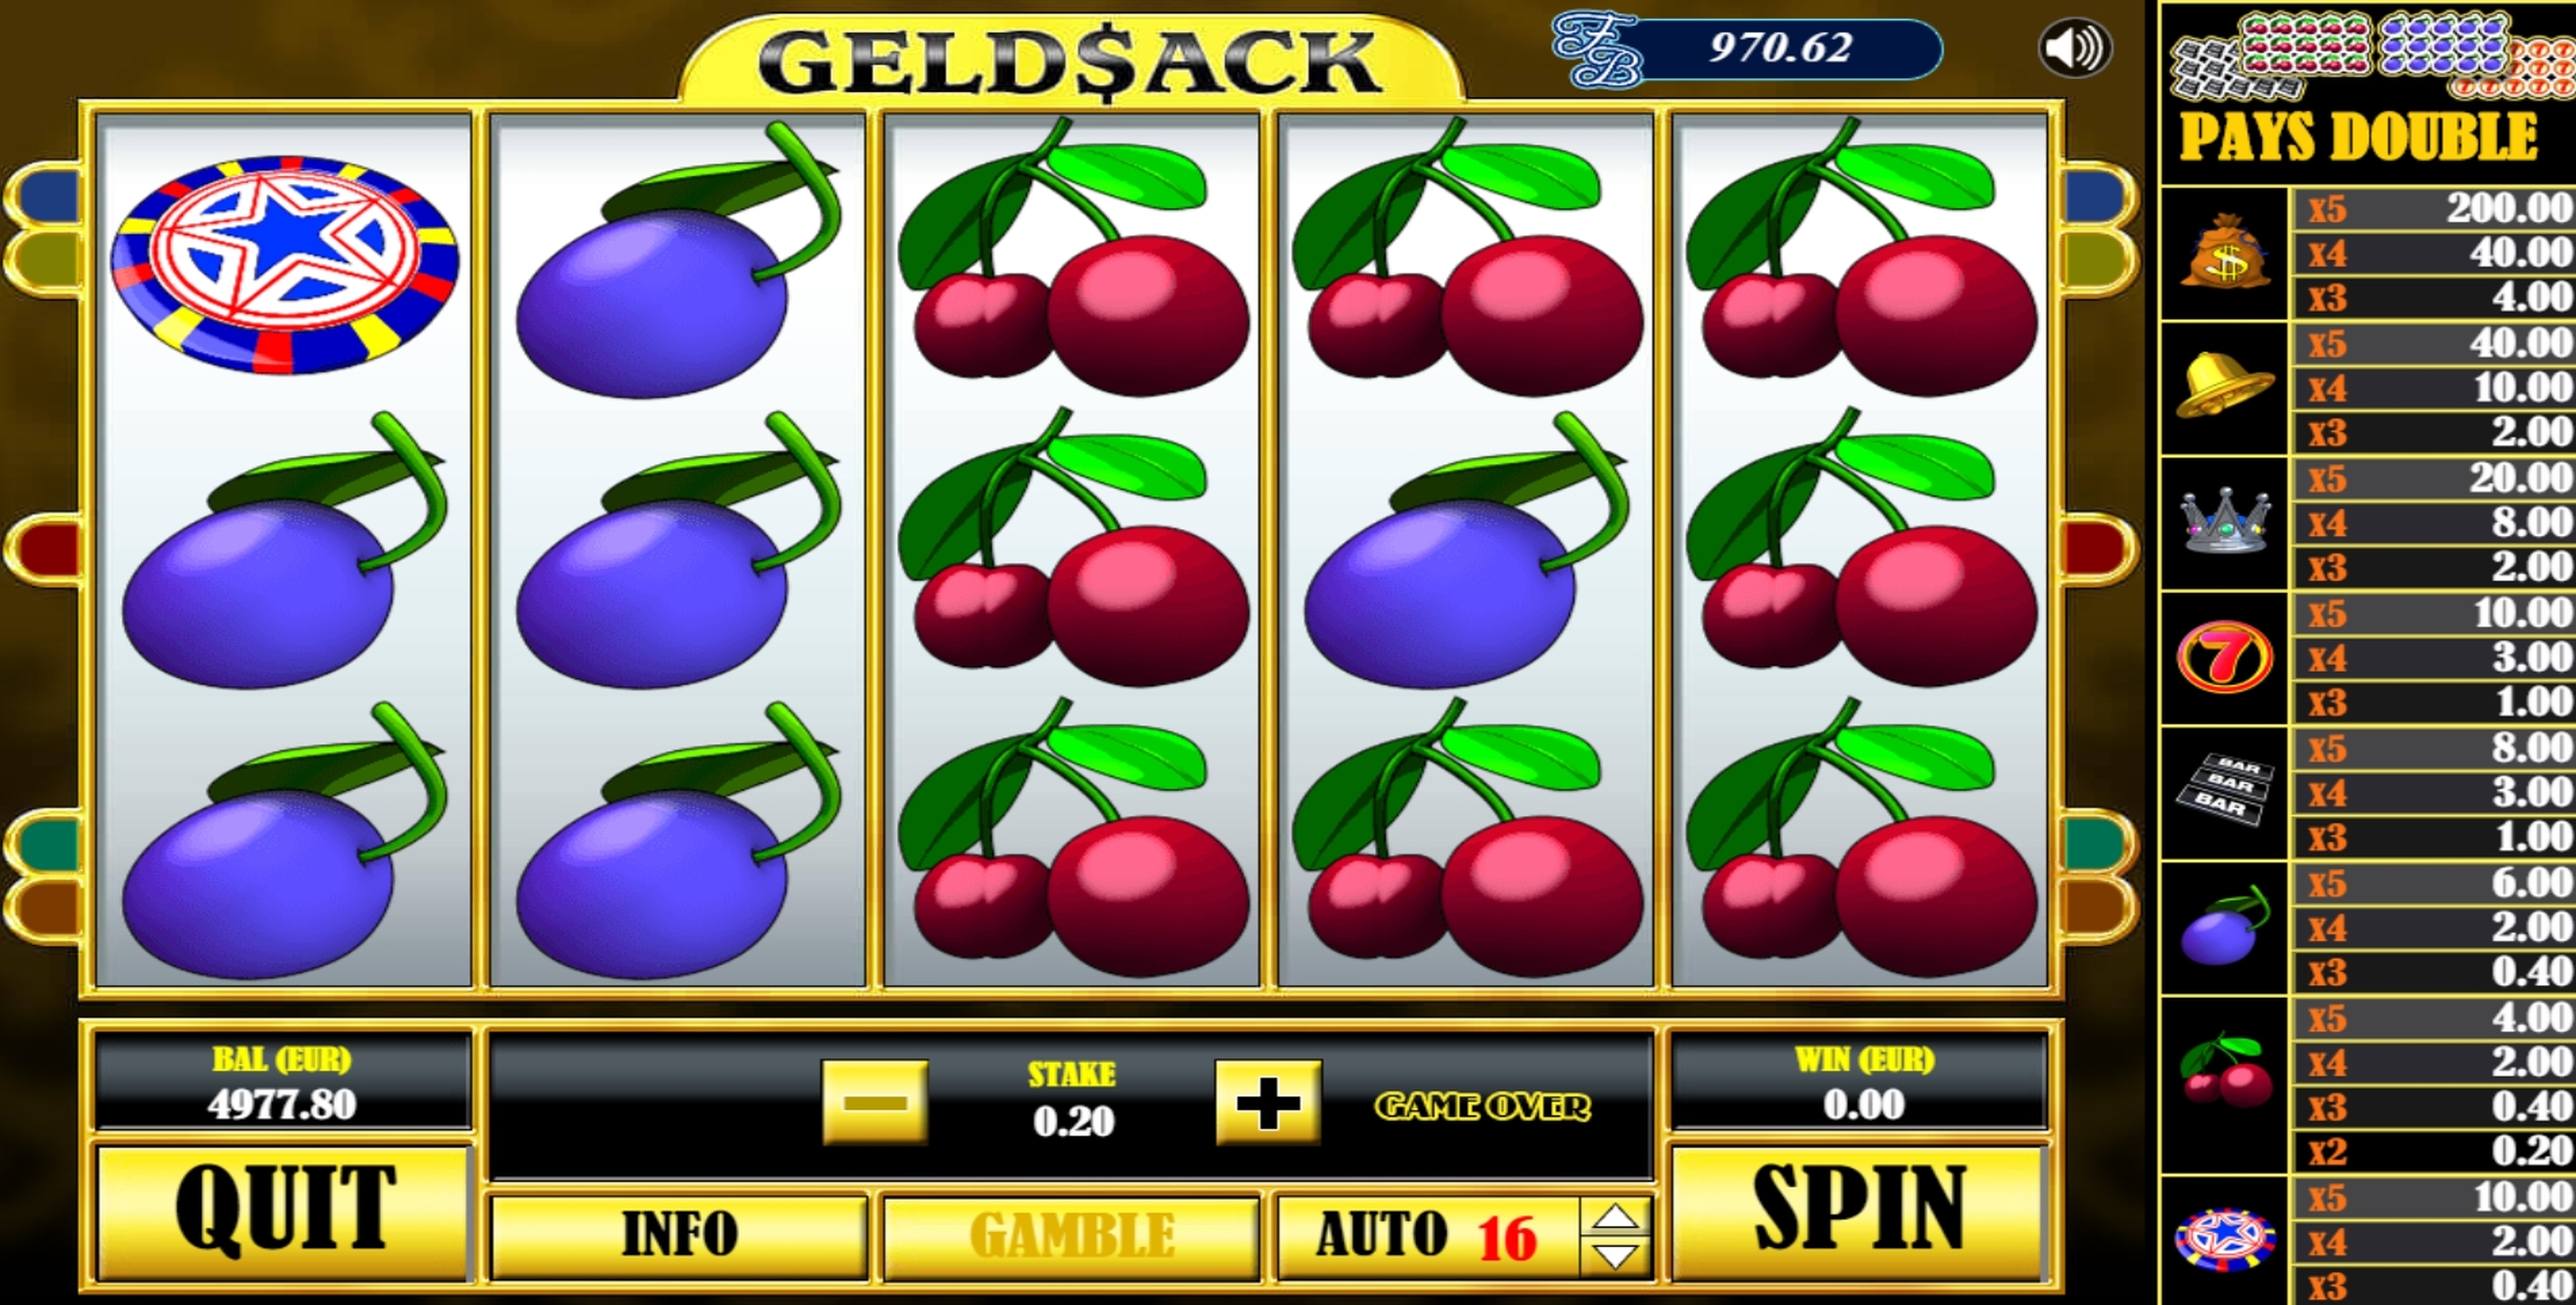 Win Money in Geldsack Free Slot Game by AlteaGaming